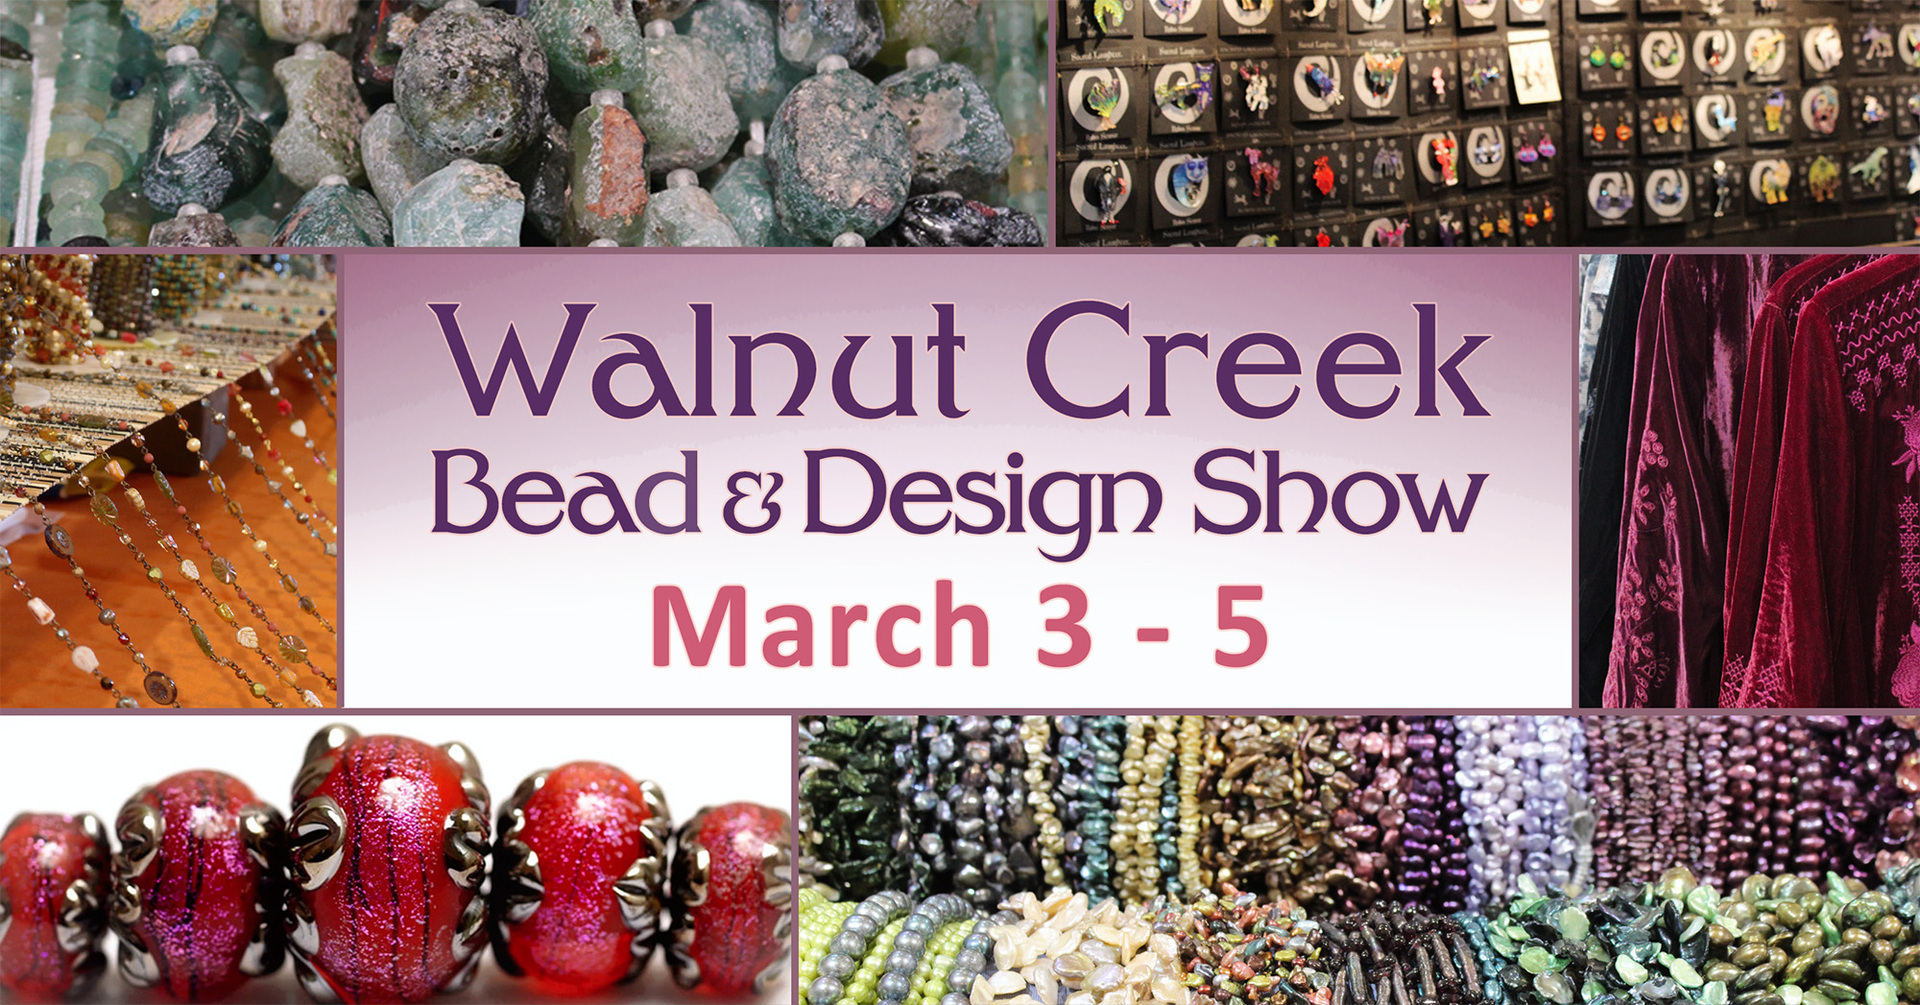 Walnut Creek Bead and Design Show, Concord, California, United States